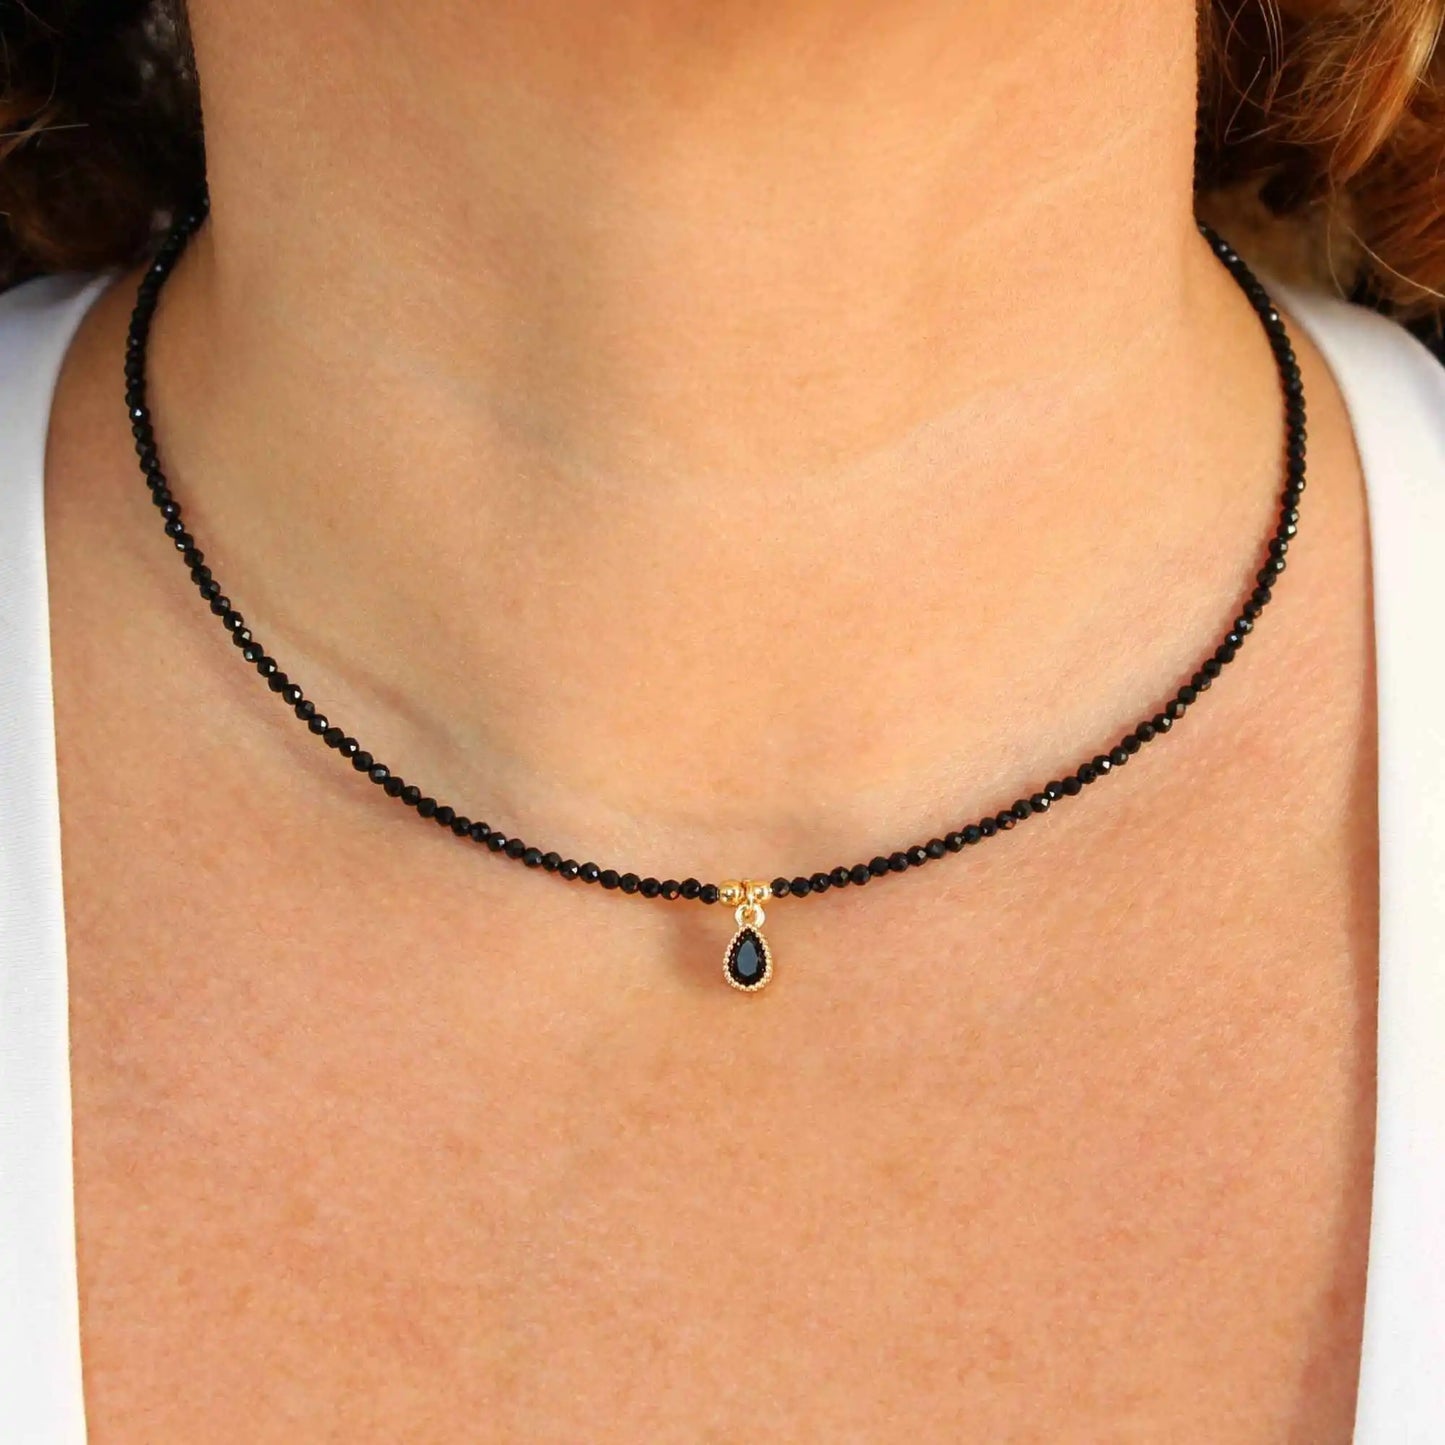 Minimalist Black Pendant Necklace, Dainty Beaded Choker